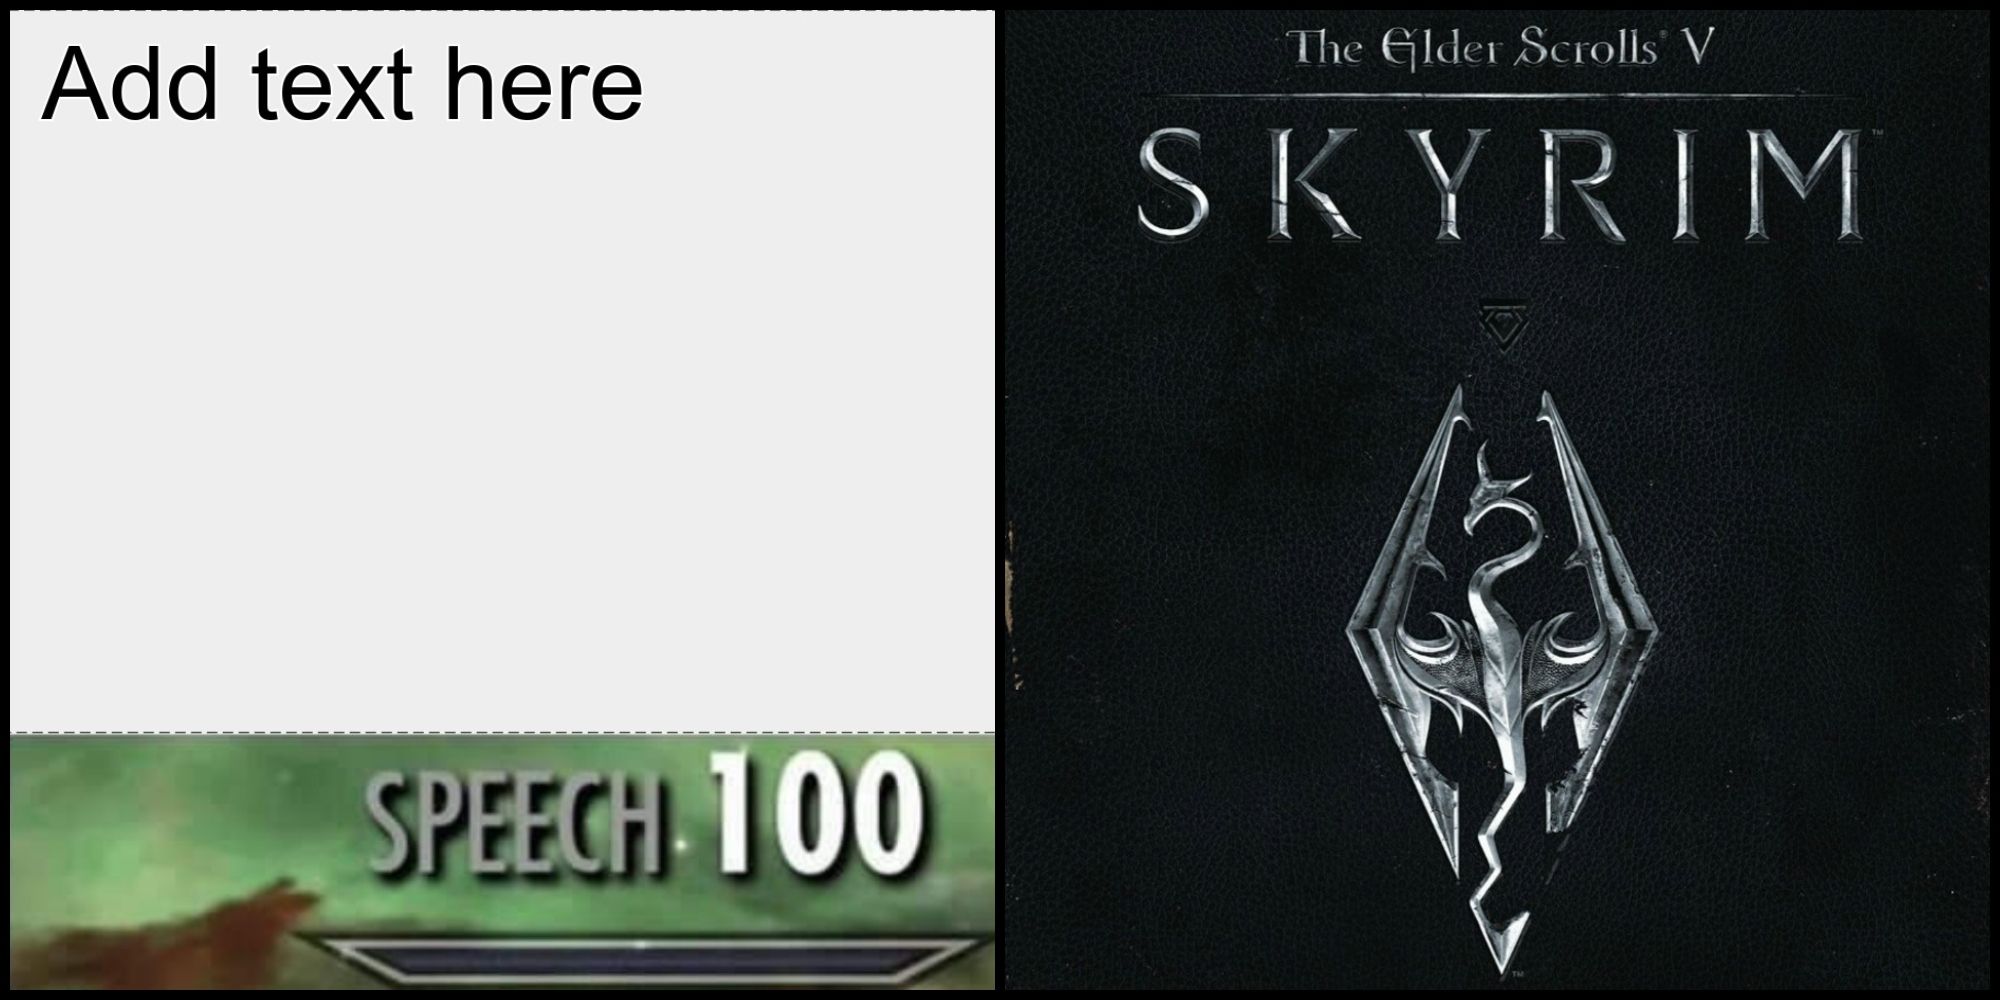 How Skyrim Spawned The Hilarious Speech 100 Meme | Screen Rant